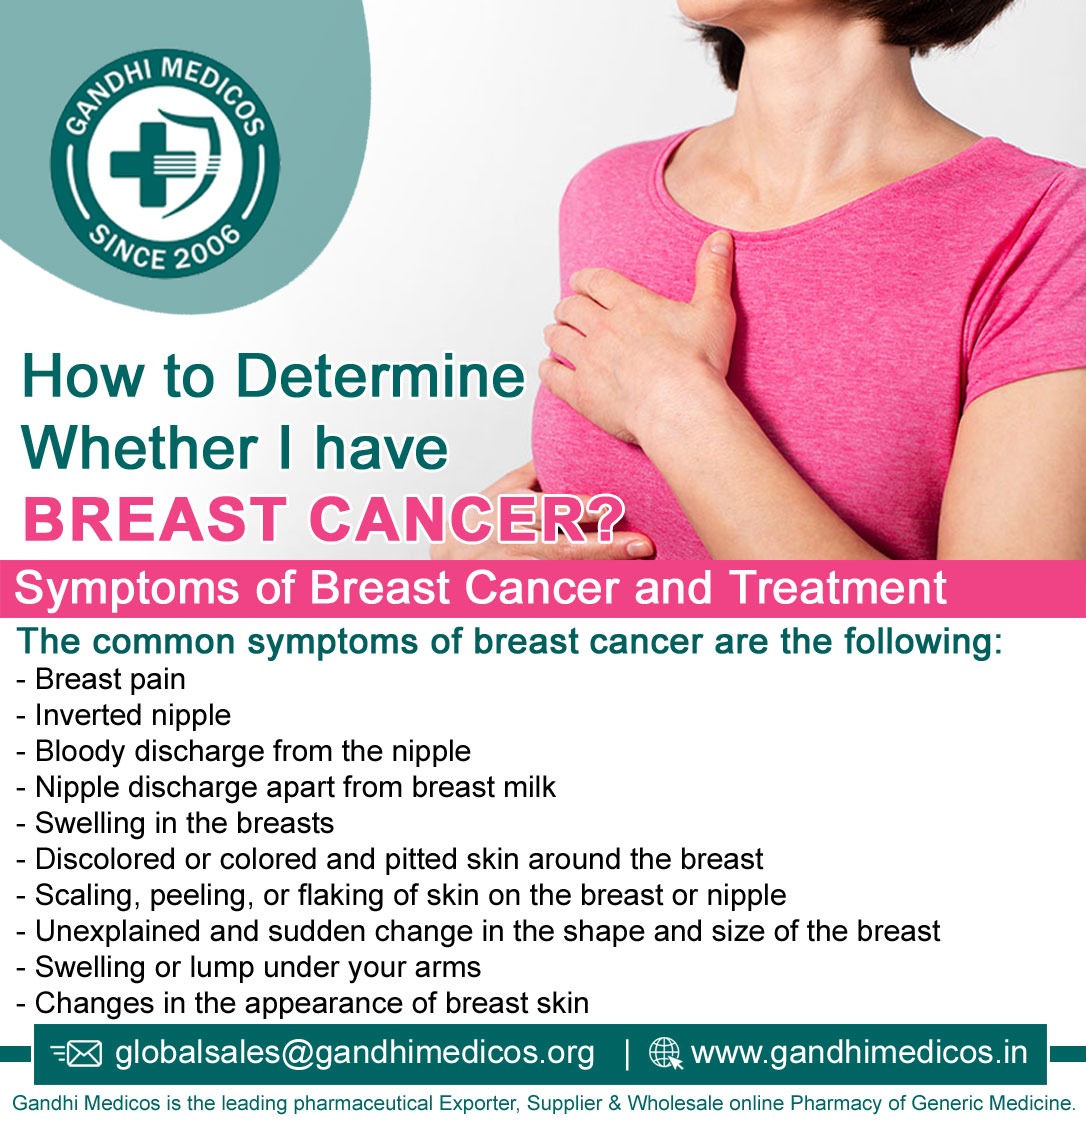 Symptoms of Breast Cancer - Best Stimucor 2.5 Tablet for Breast Cancer